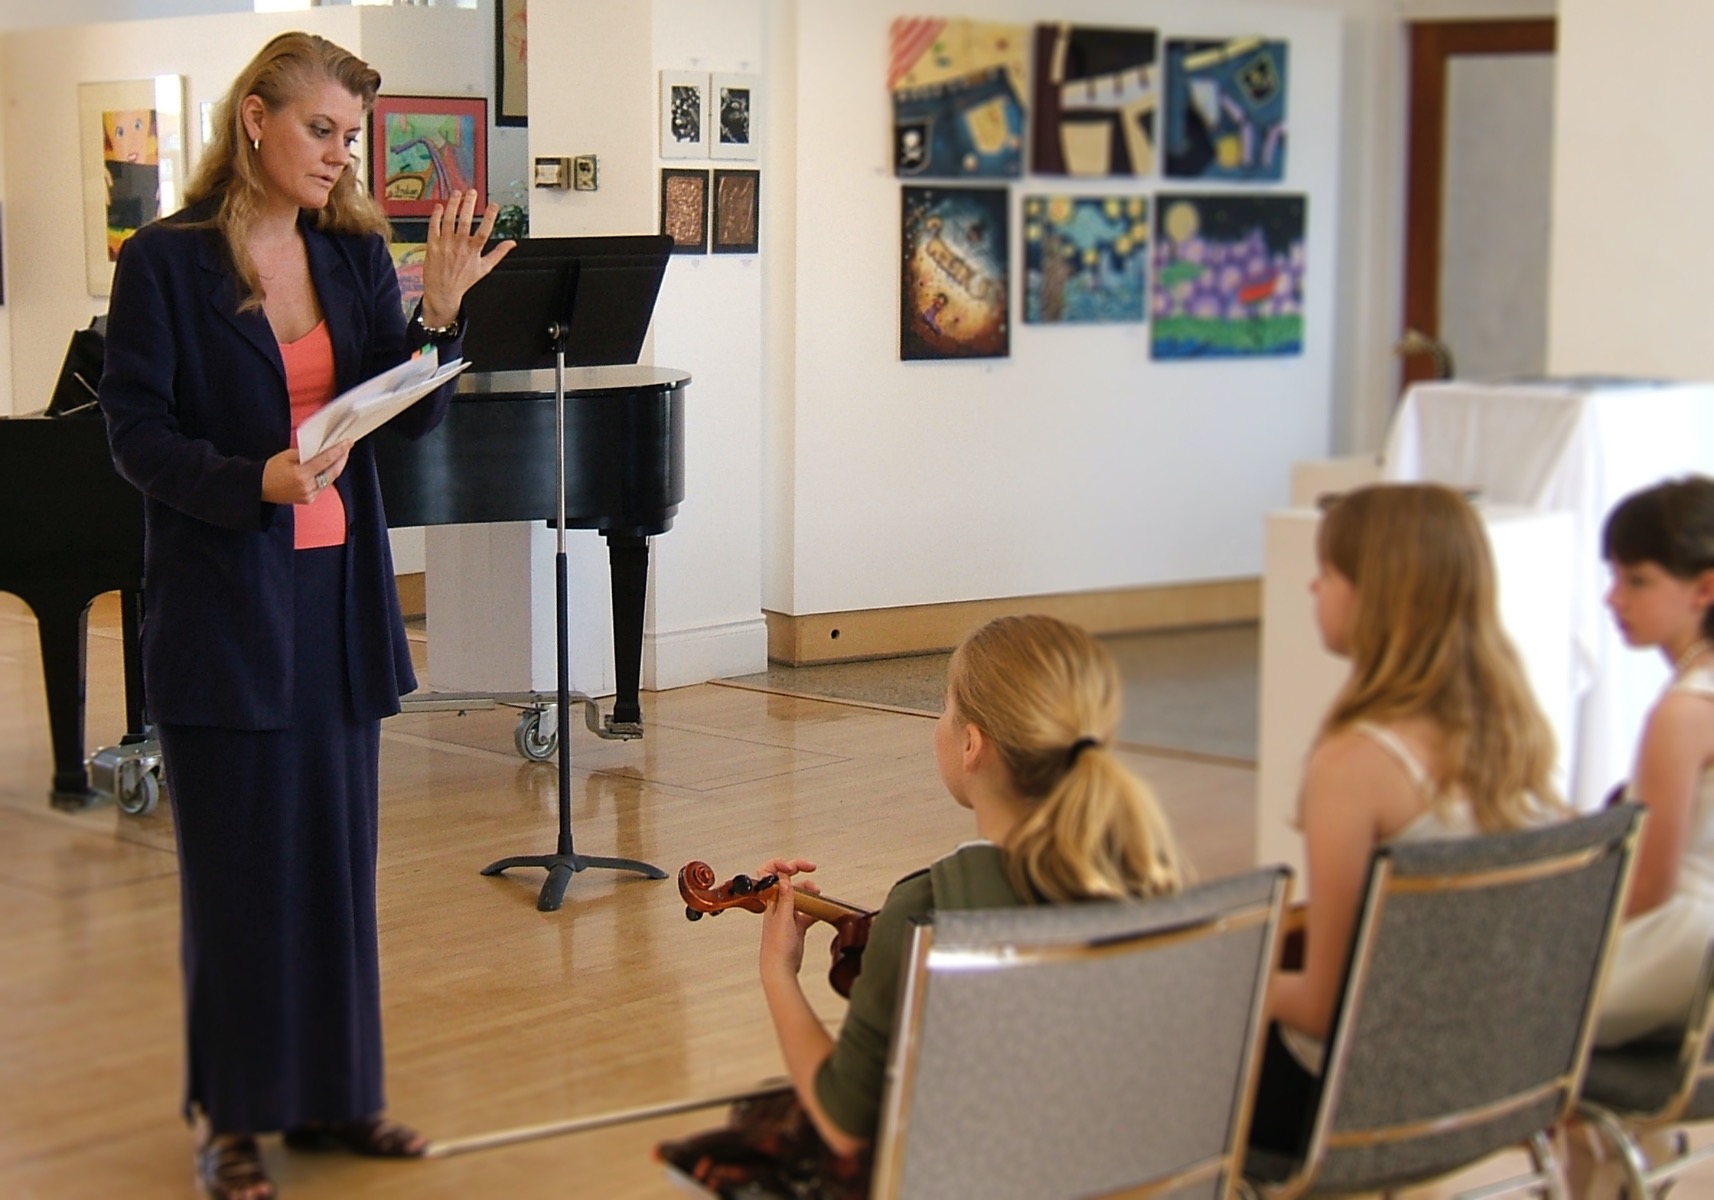 Violin adjudicator talking to three young violin students in an art gallery